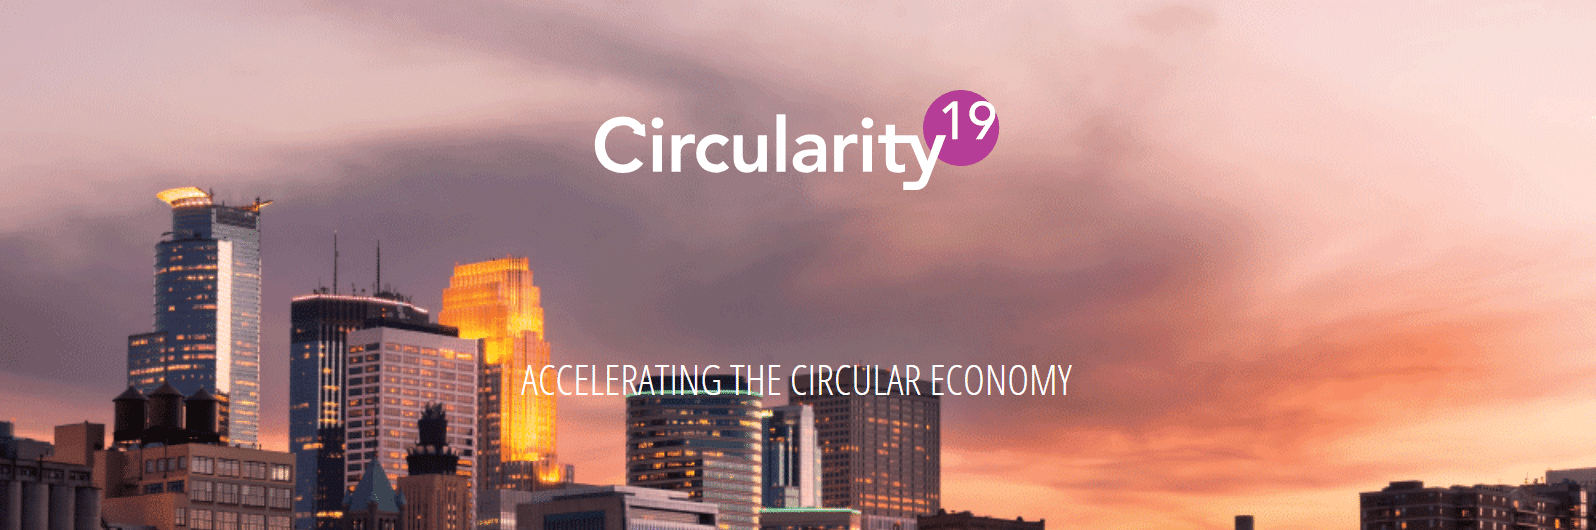 Circularity 2019